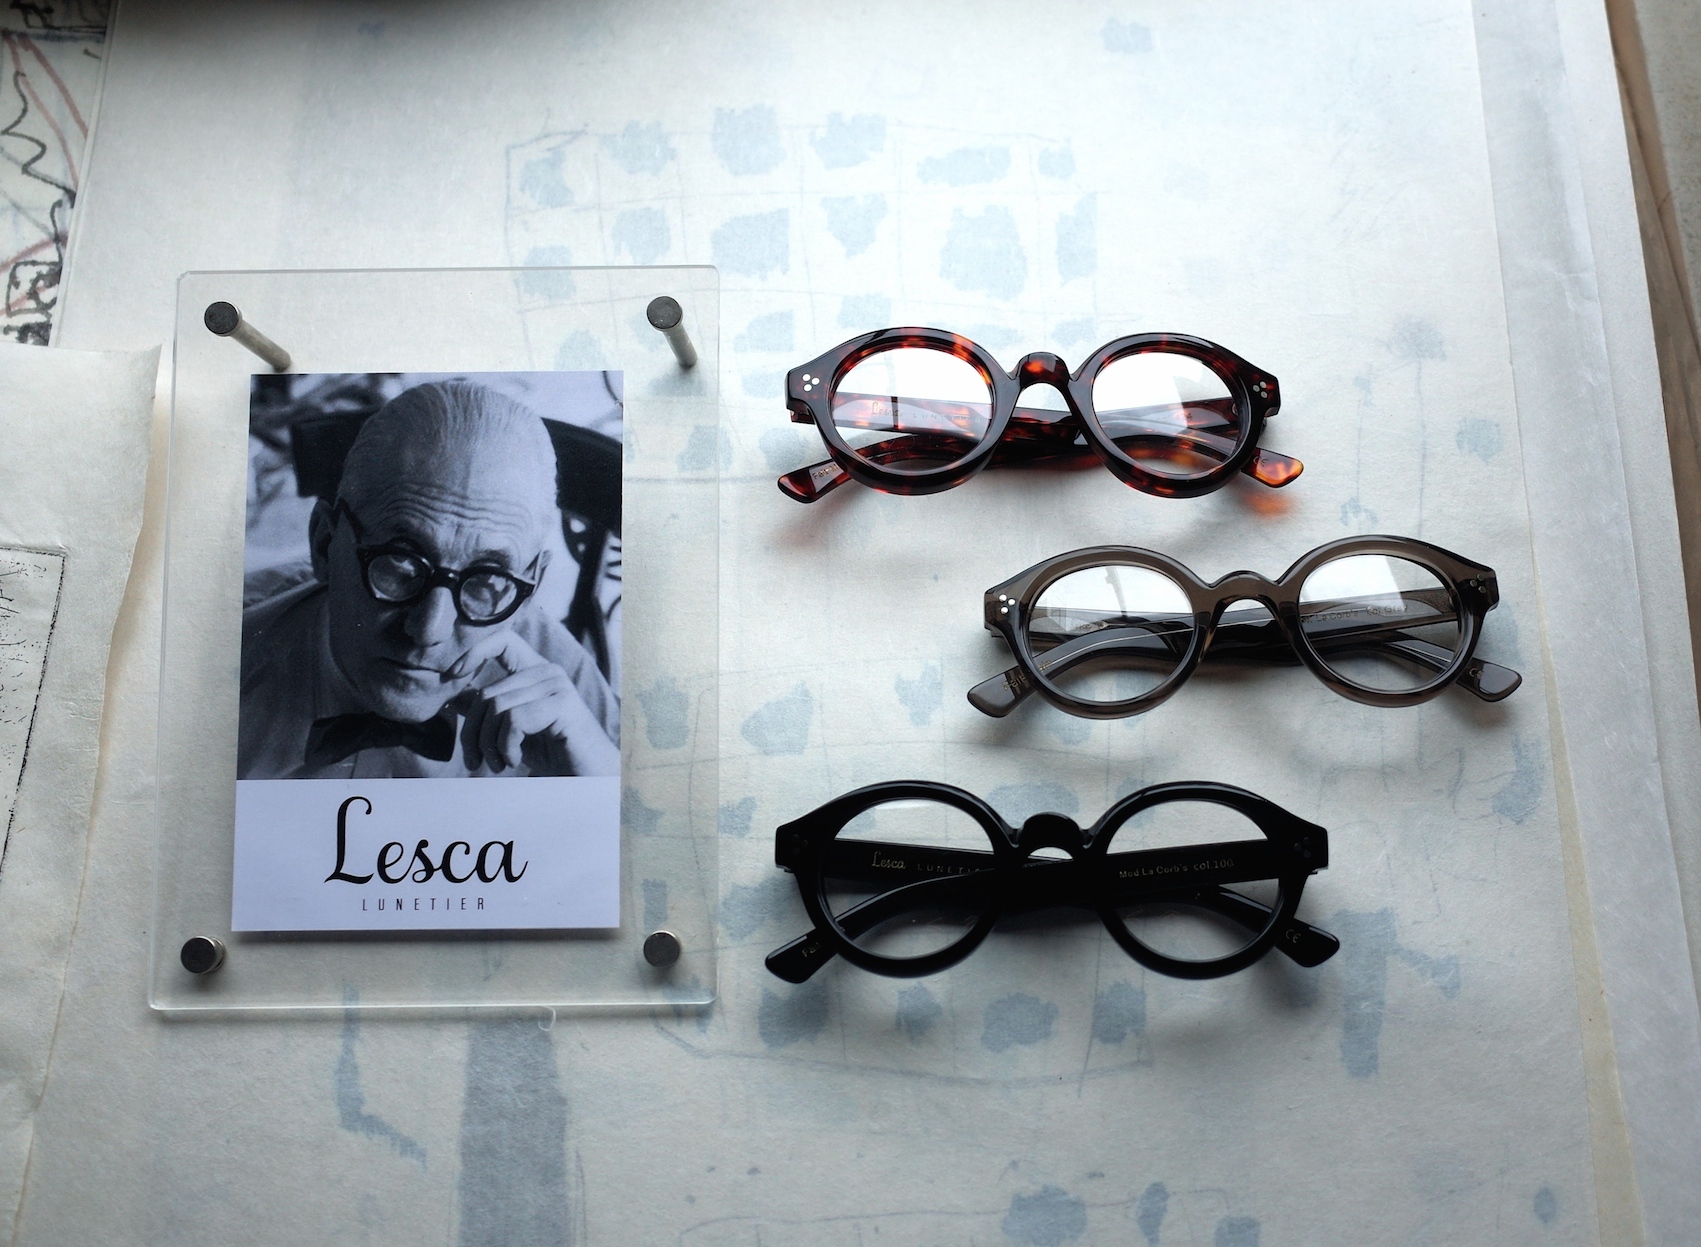 Lesca Lunetier / La Corb's Grey ￥37,000 | ビジュ寺口 ／ 時計 